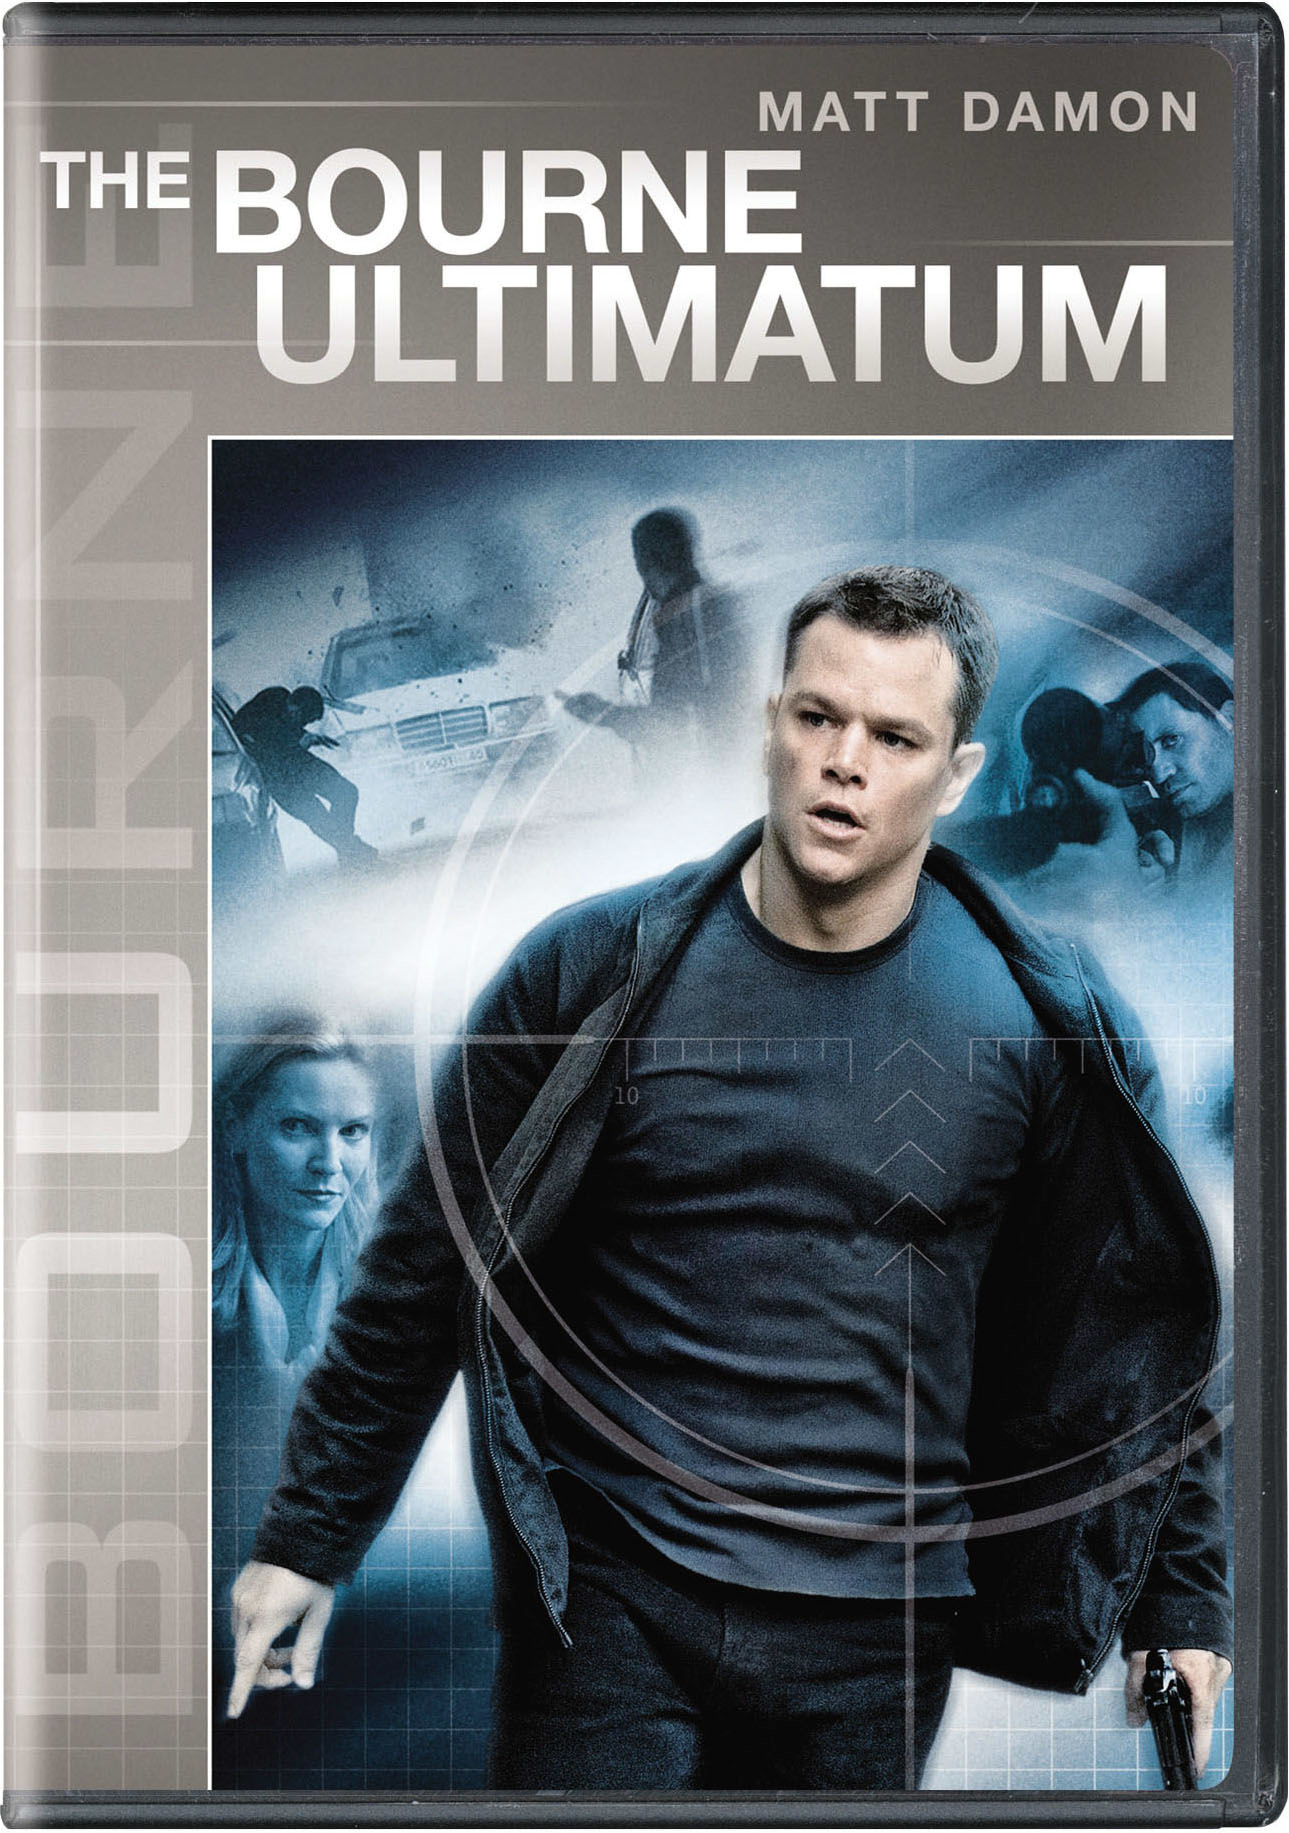 The Bourne Ultimatum (DVD New Box Art) - DVD [ 2007 ]  - Thriller Movies On DVD - Movies On GRUV